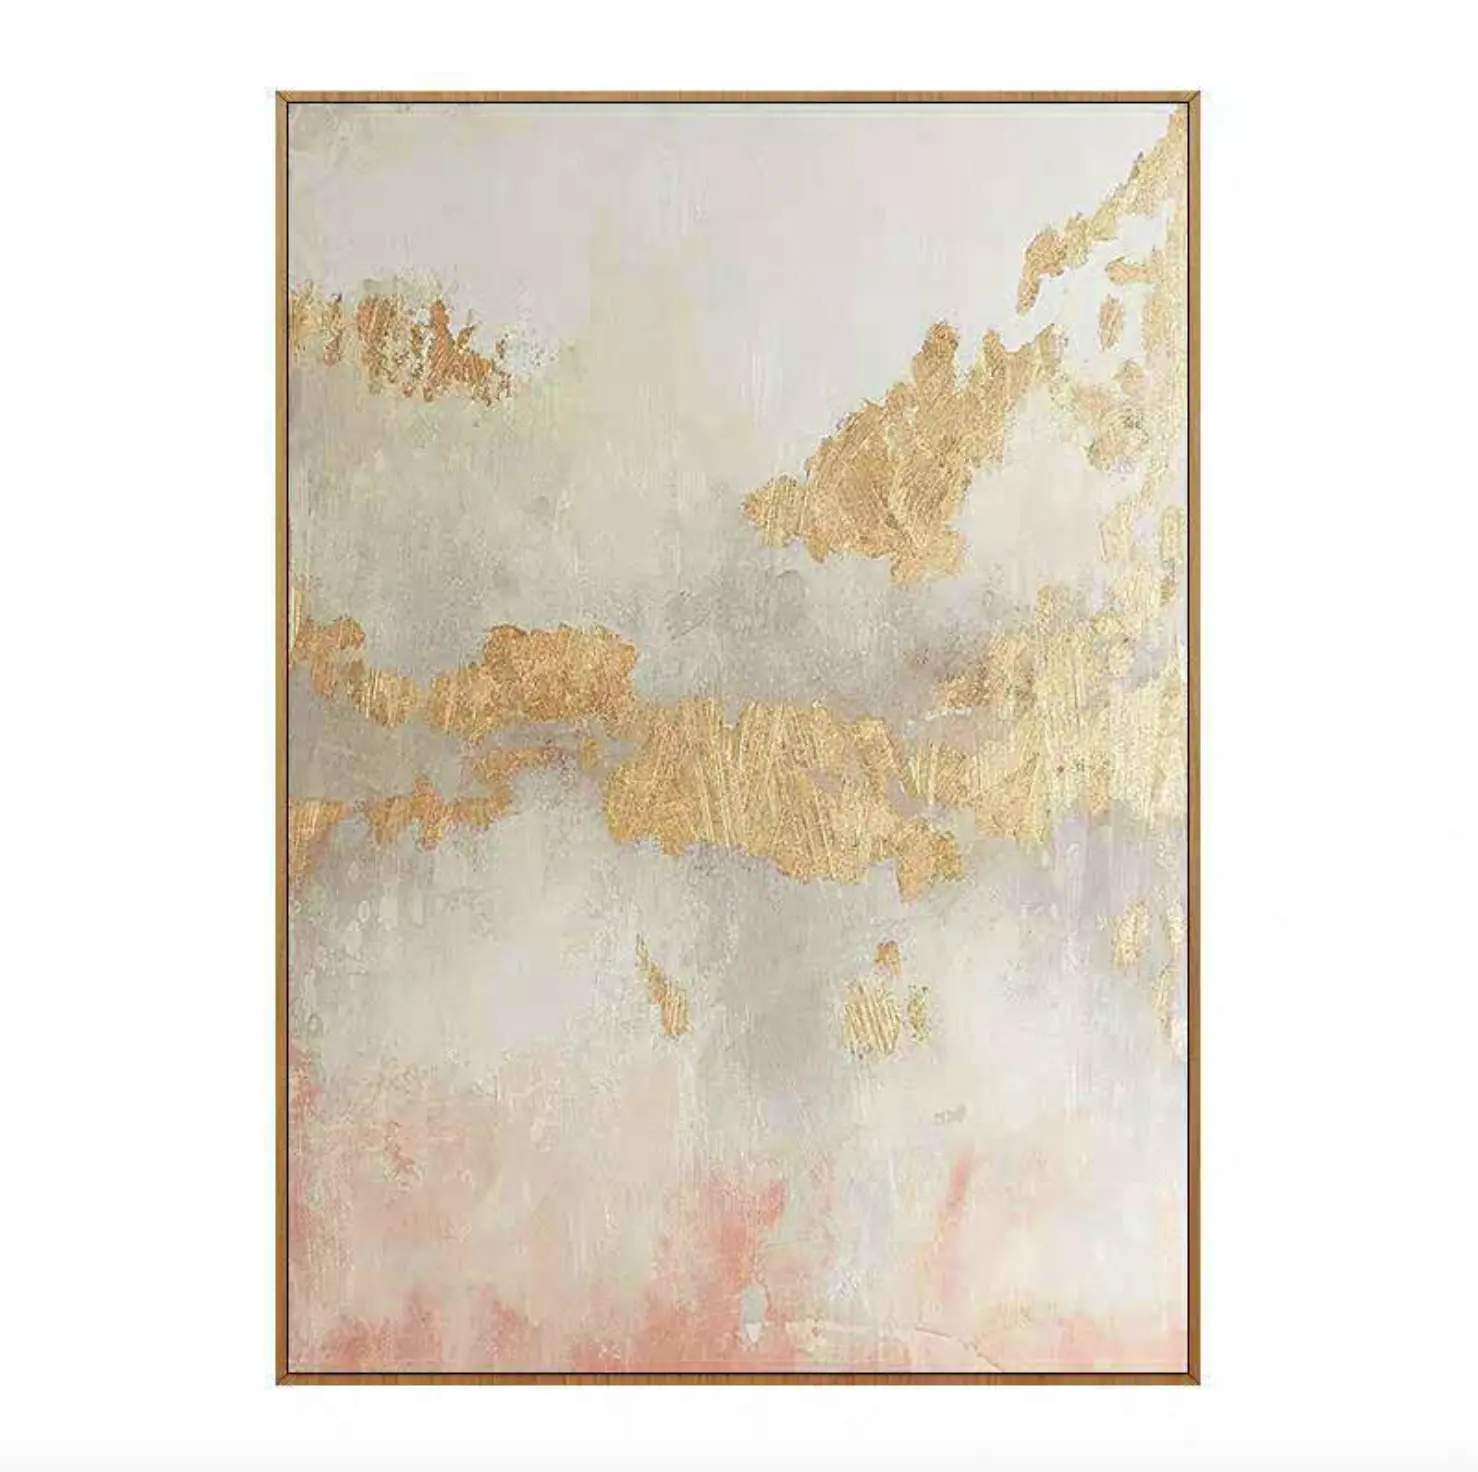 Pintura al óleo acrílica de lámina dorada abstracta, estilo moderno, para decoración de pared, Vertical, 100%, buena calidad